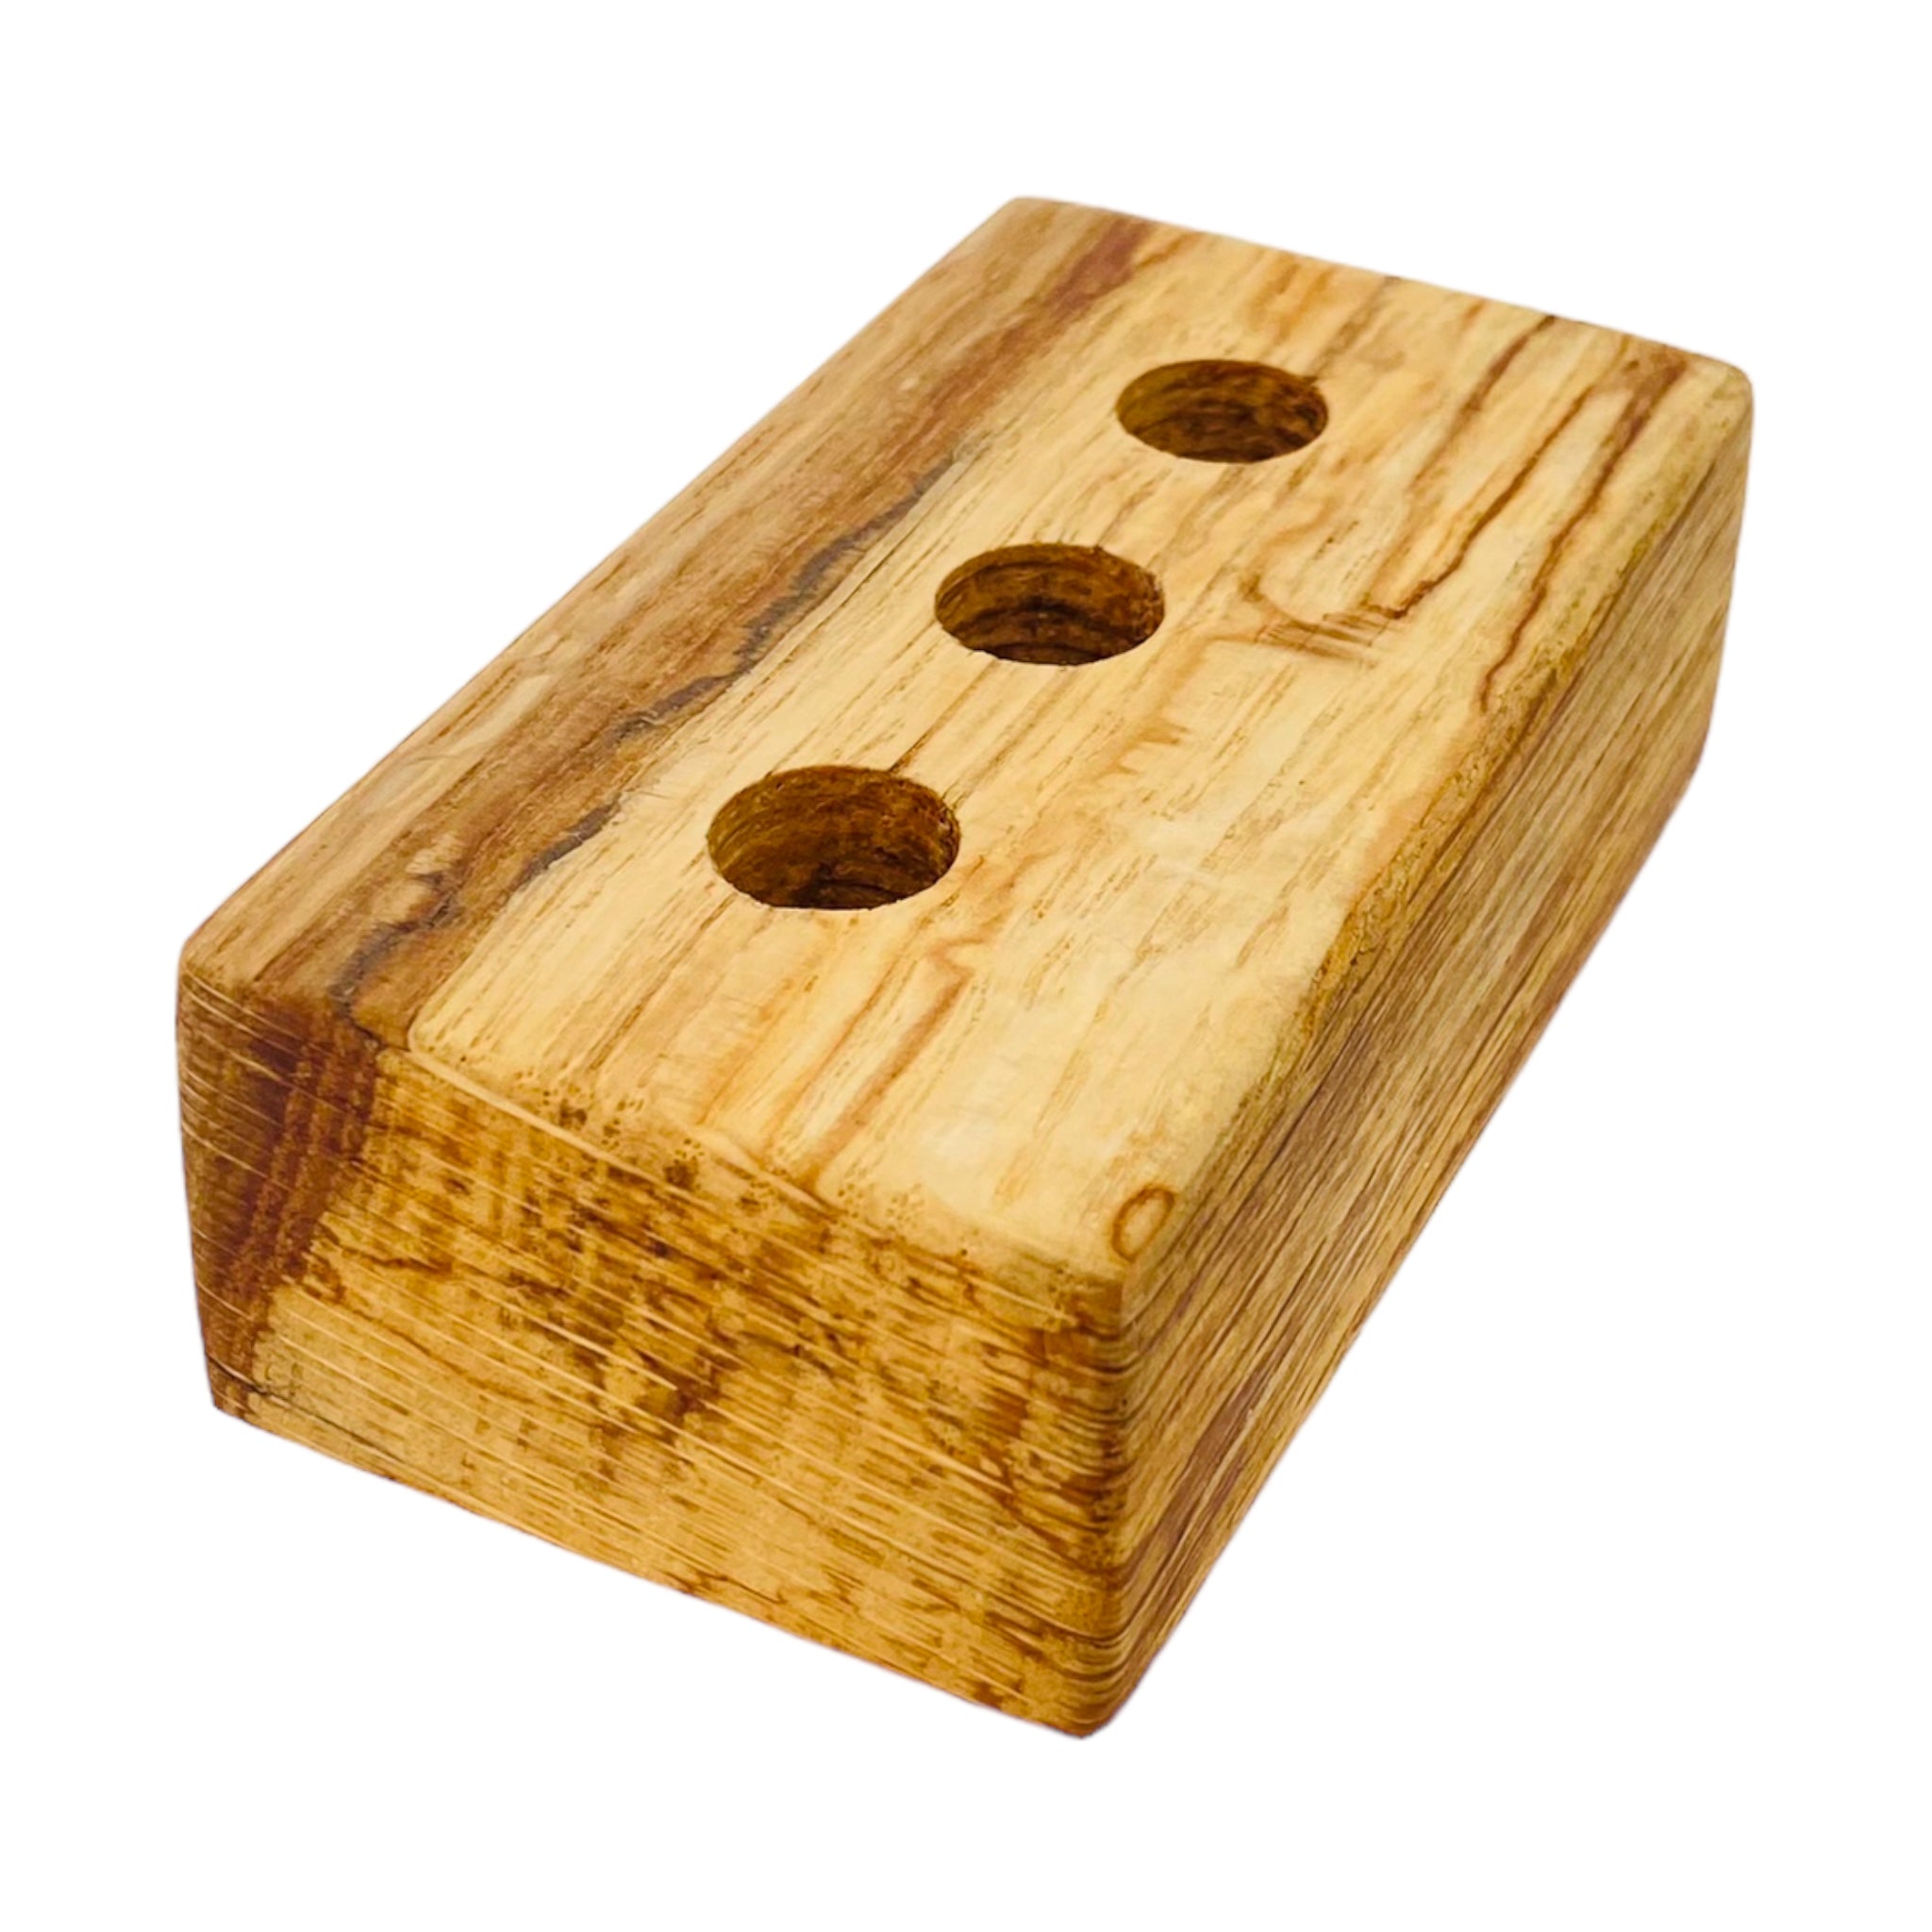 3 Hole Wood Display Stand Holder For 14mm Bong Bowl Pieces Or Quartz Bangers - Cork Oak